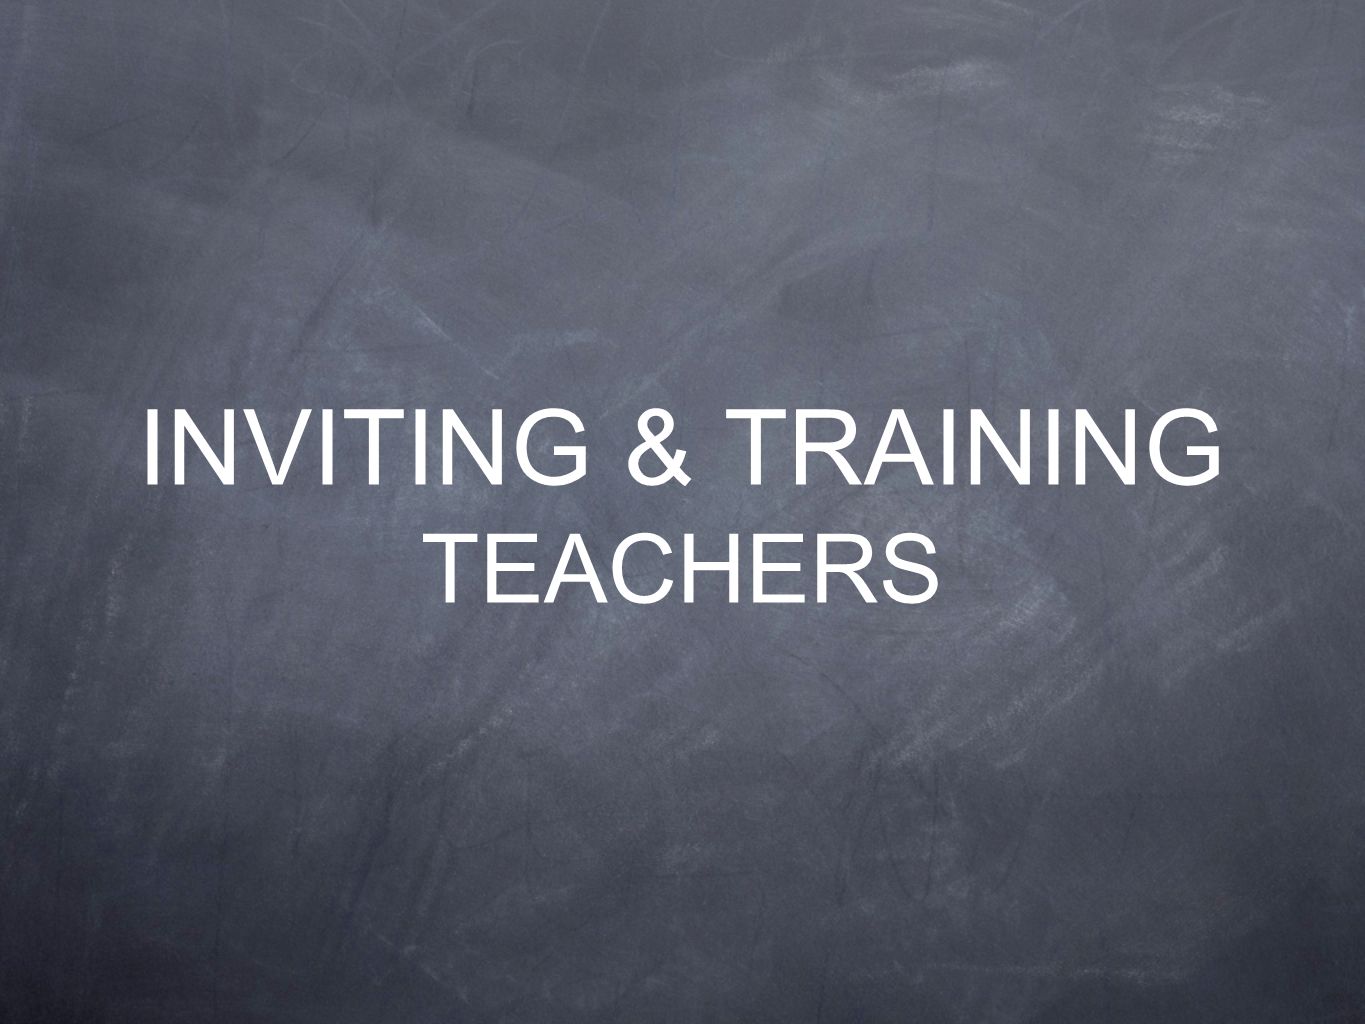 INVITING & TRAINING TEACHERS